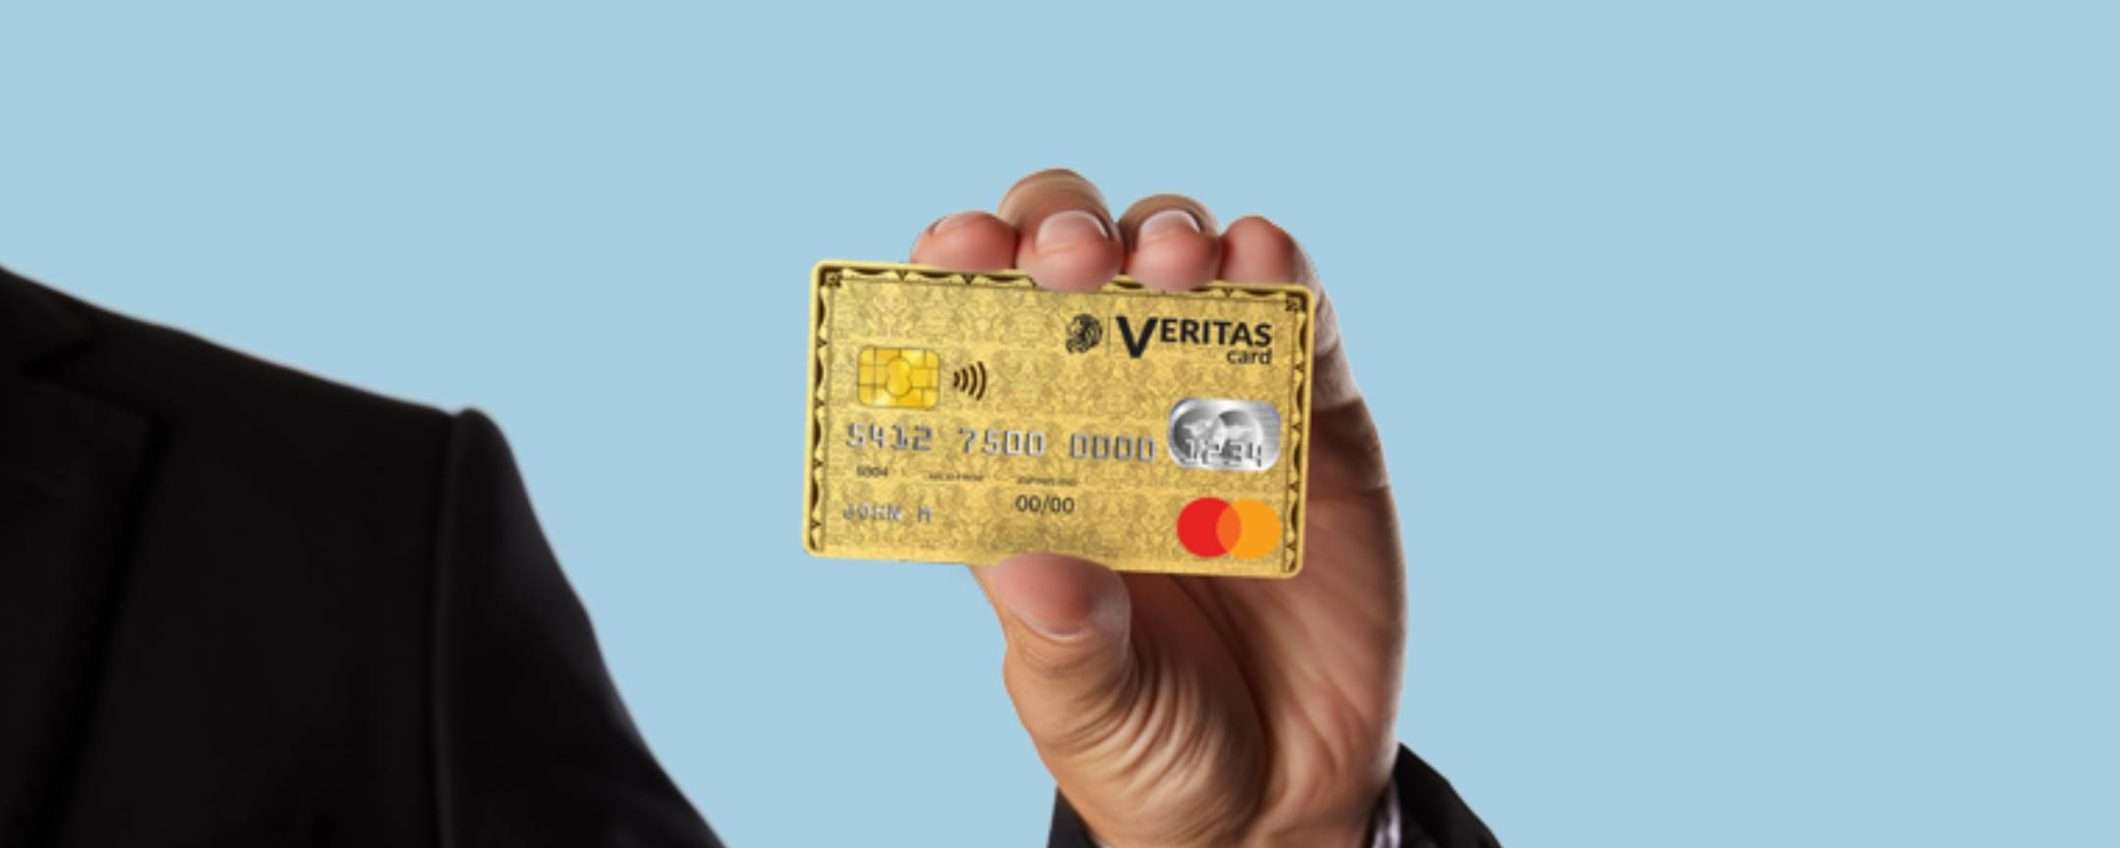 Carta Veritas: carta prepagata Mastercard con IBAN personalizzabile